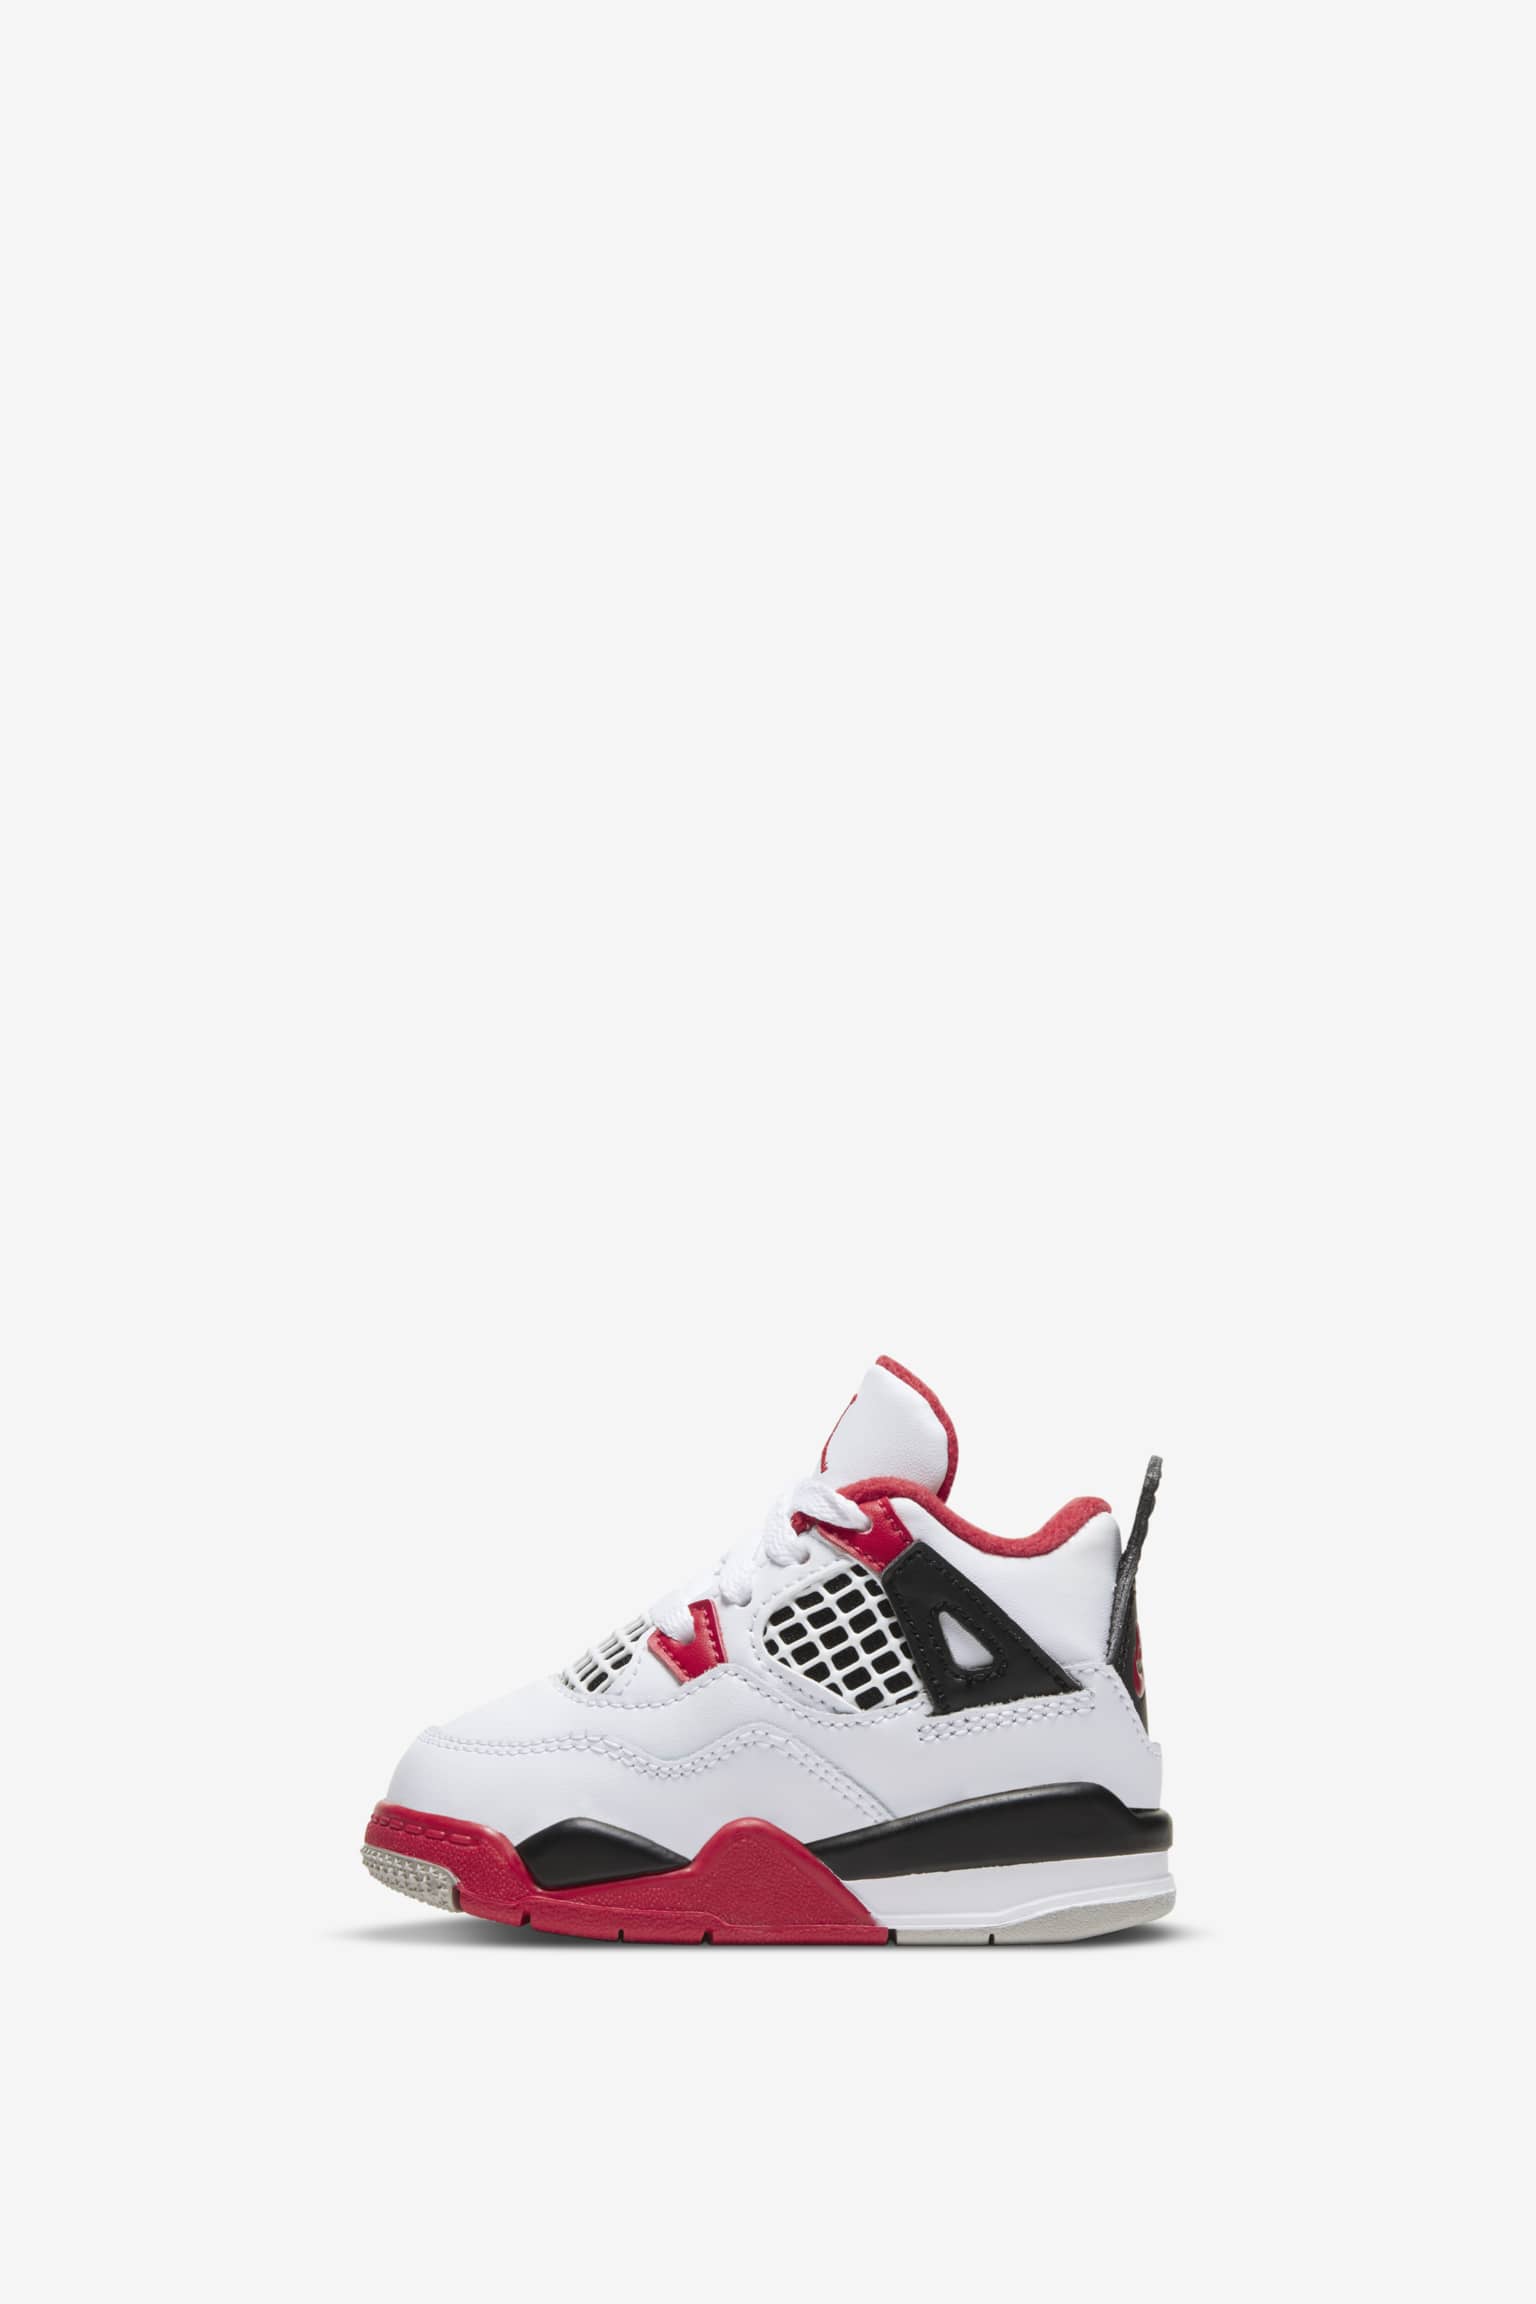 Air Jordan 4 'Fire Red' 發售日期. Nike 